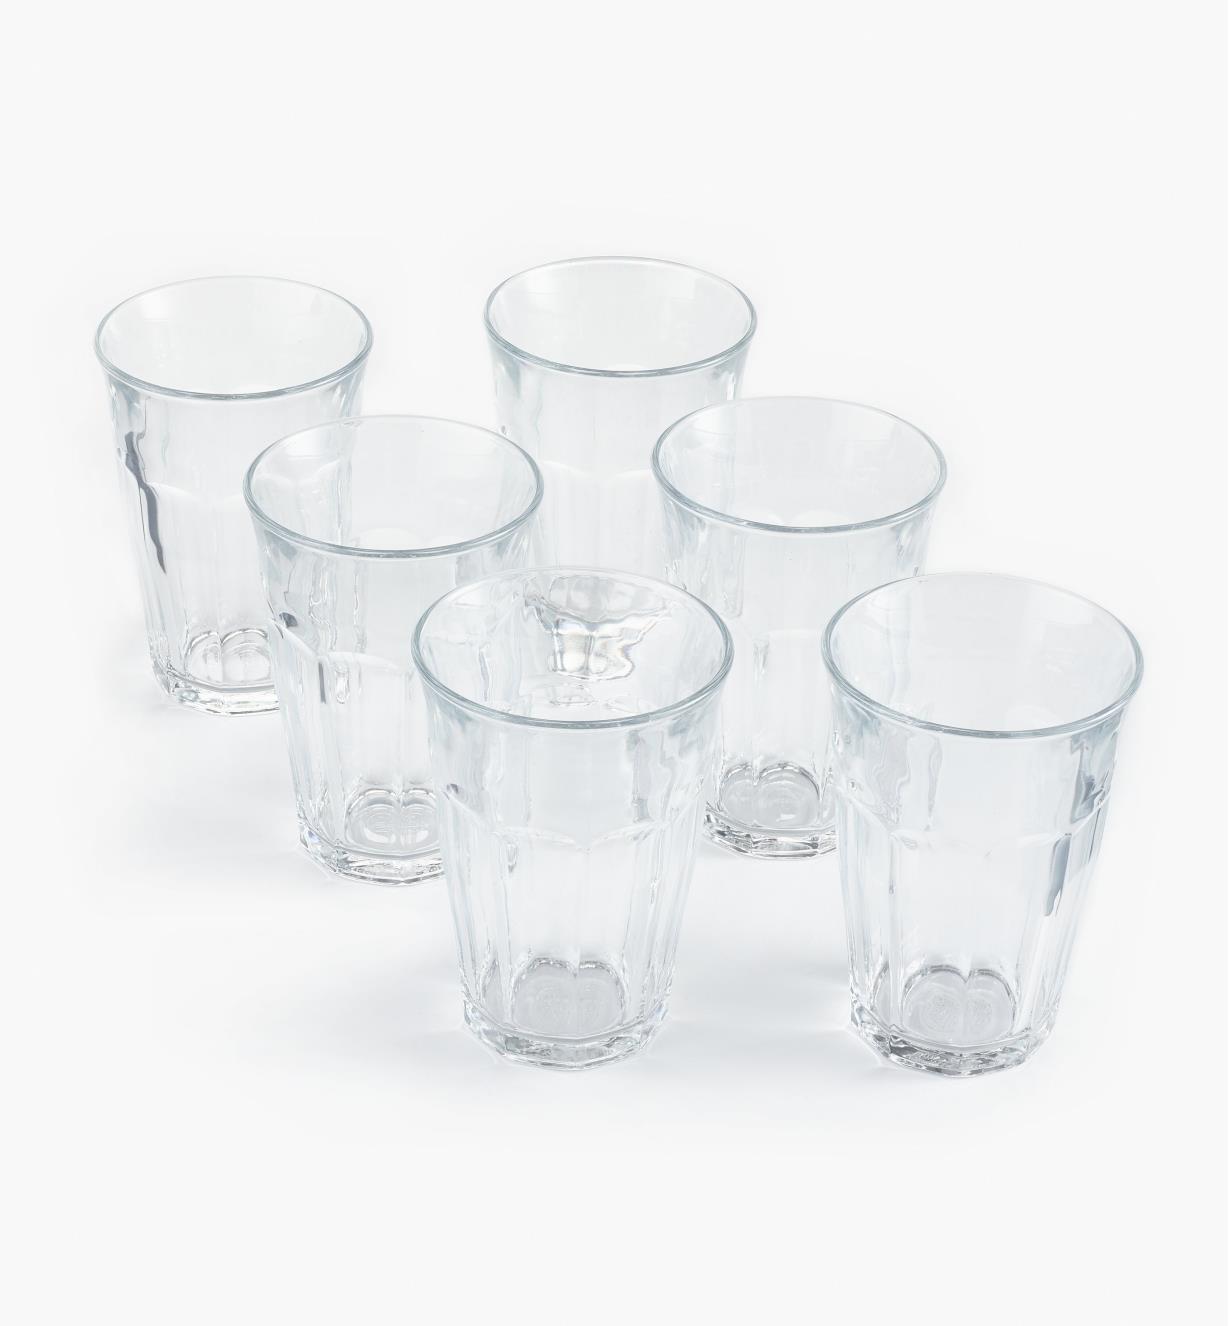 44K0807 - Duralex Picardie 360ml (12.2 fl oz) Glasses, set of 6